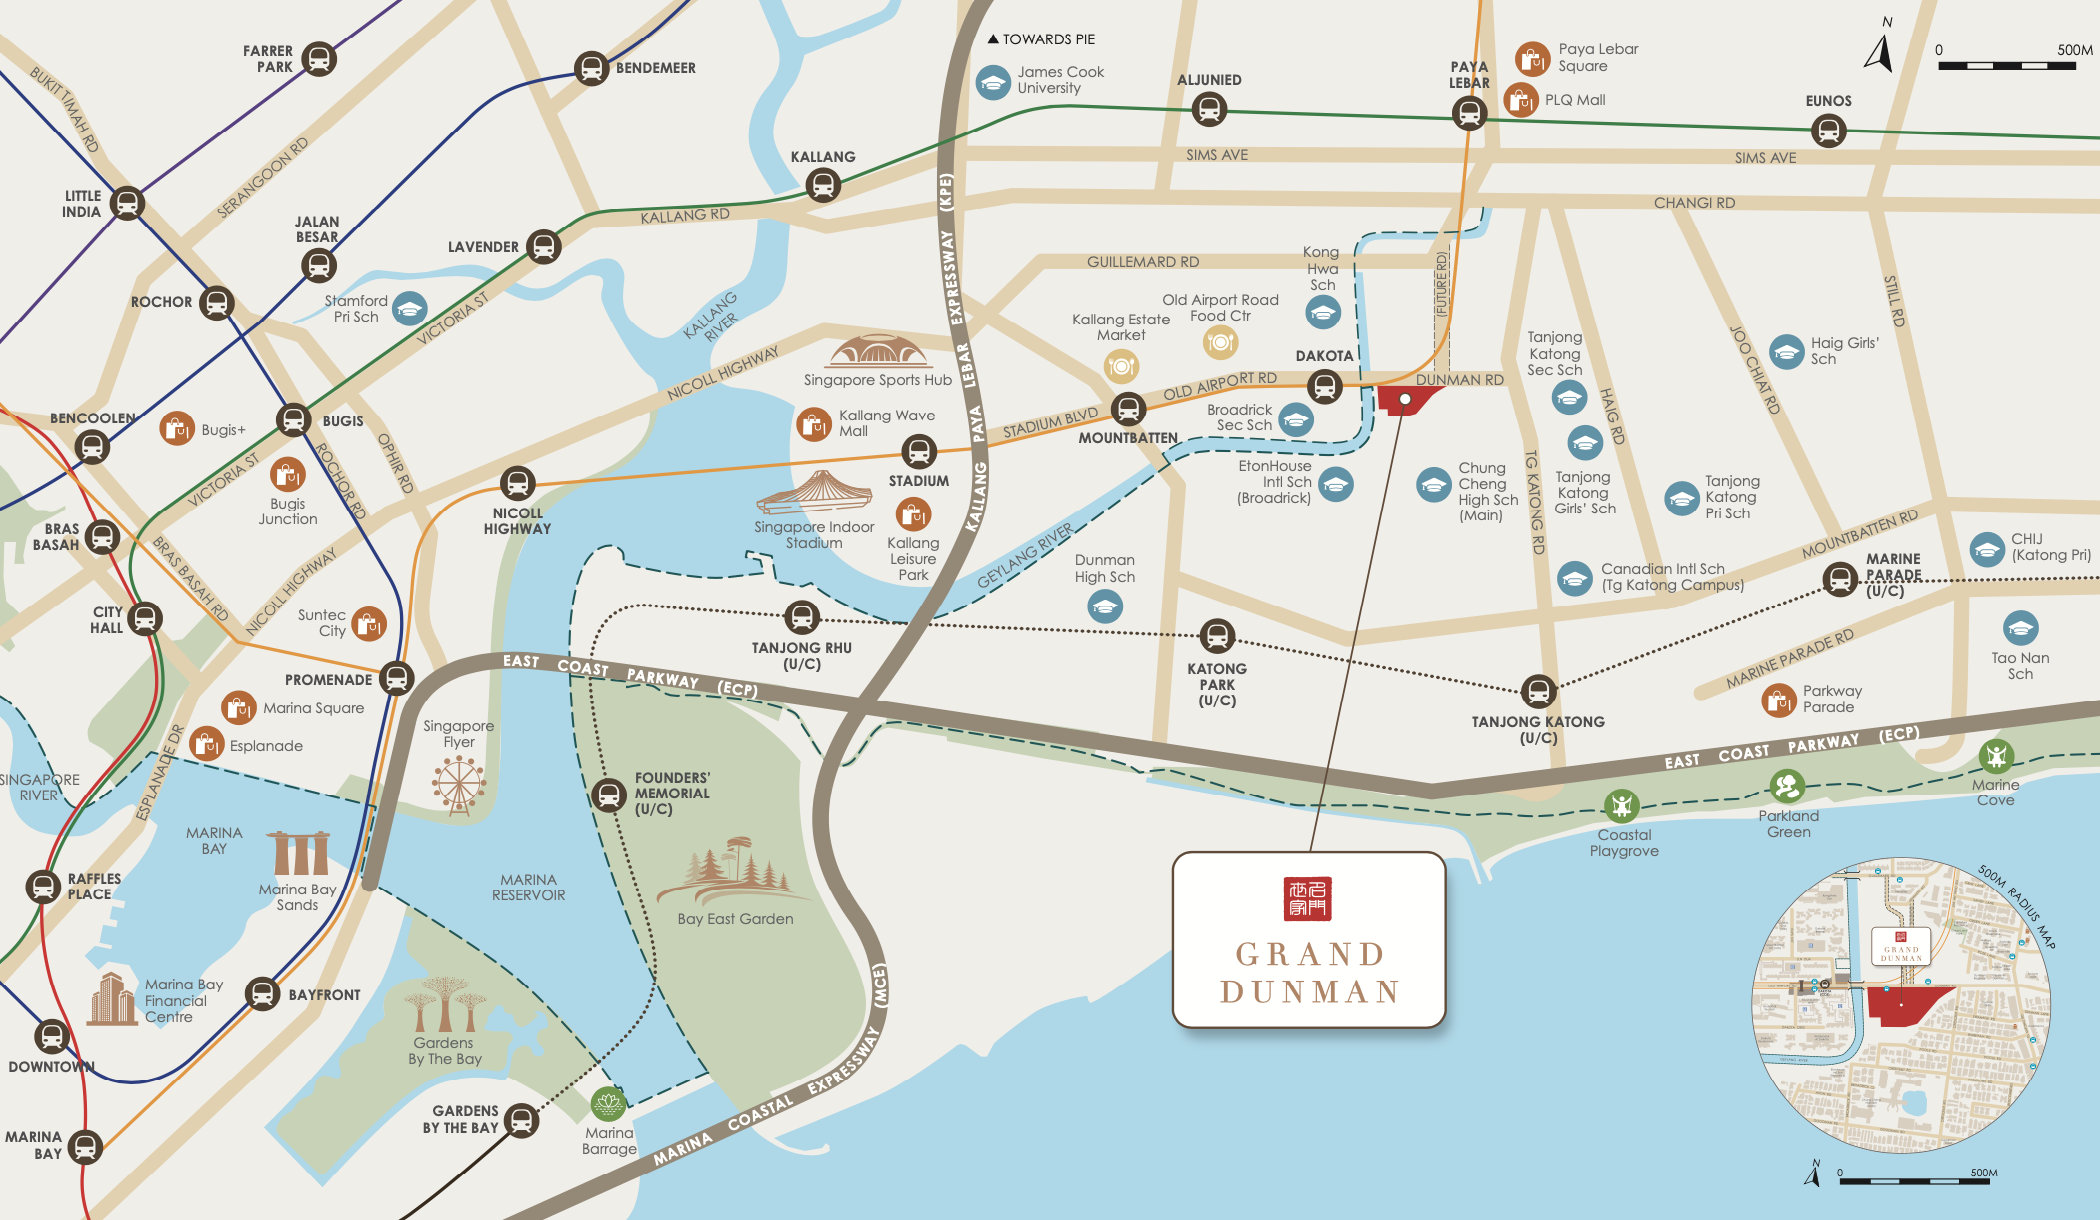 The Grand Dunman Location Map . Singapore